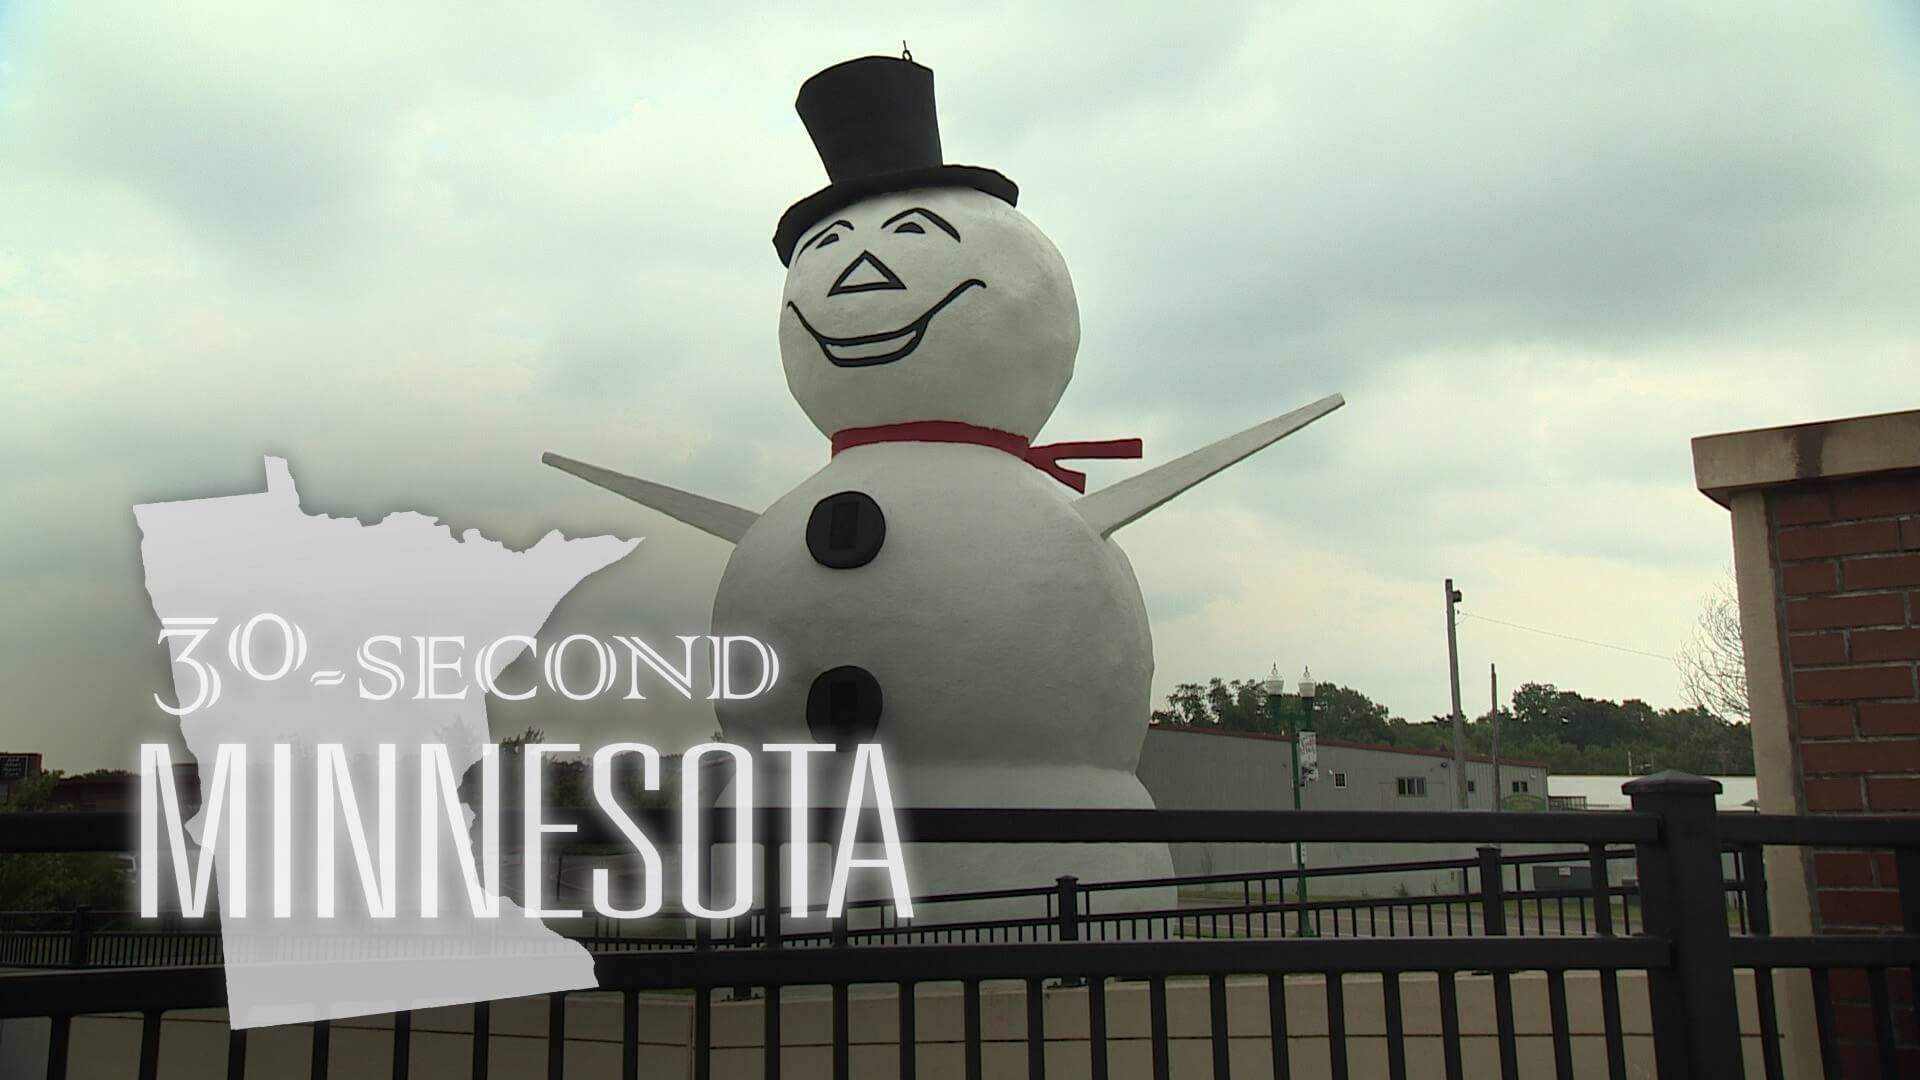 30-Second Minnesota: The World's Largest Stucco Snowman